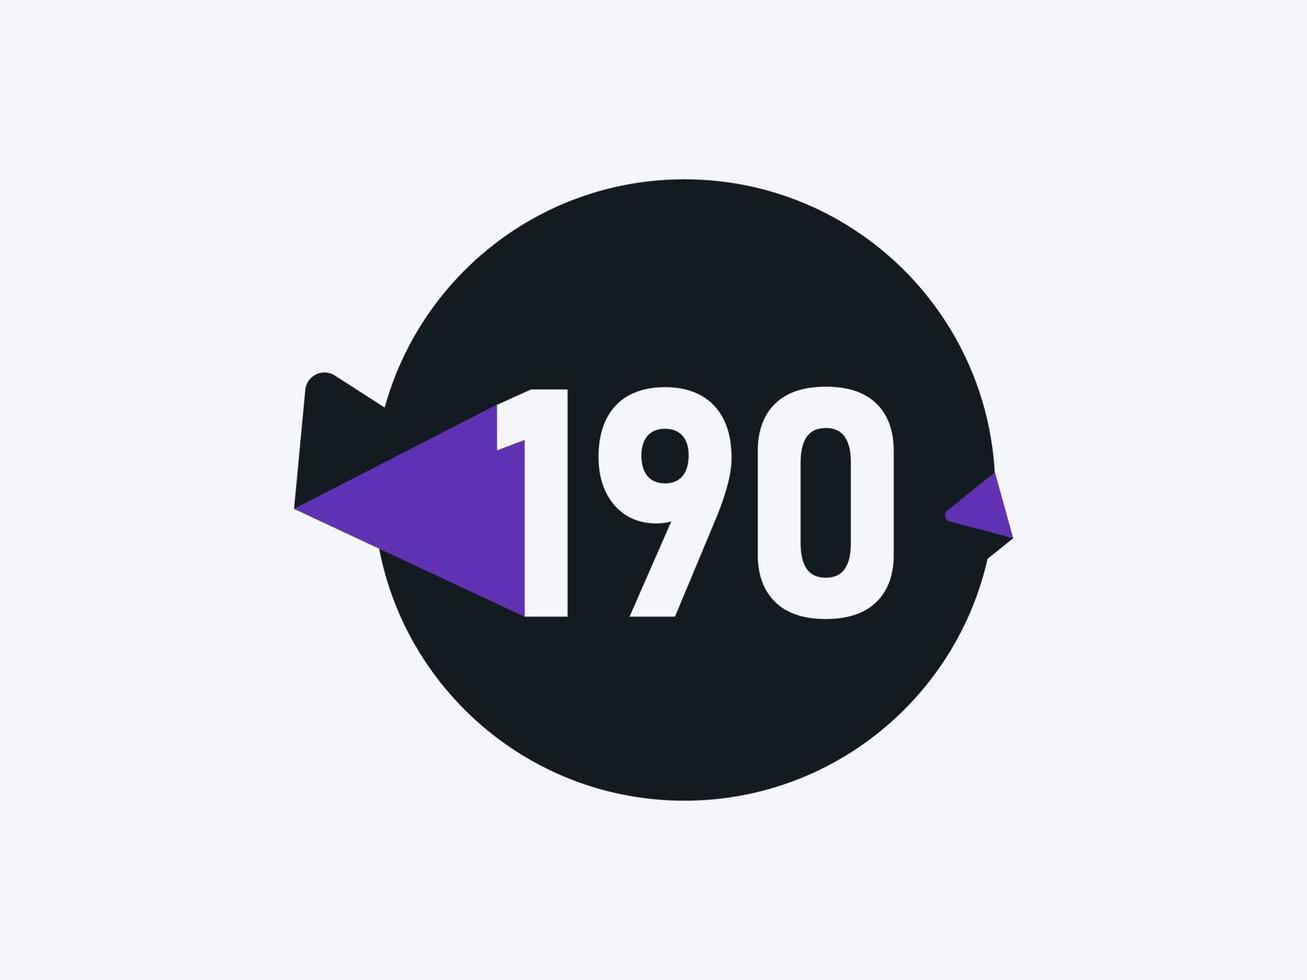 190 Number logo icon design vector image. Number logo icon design vector image